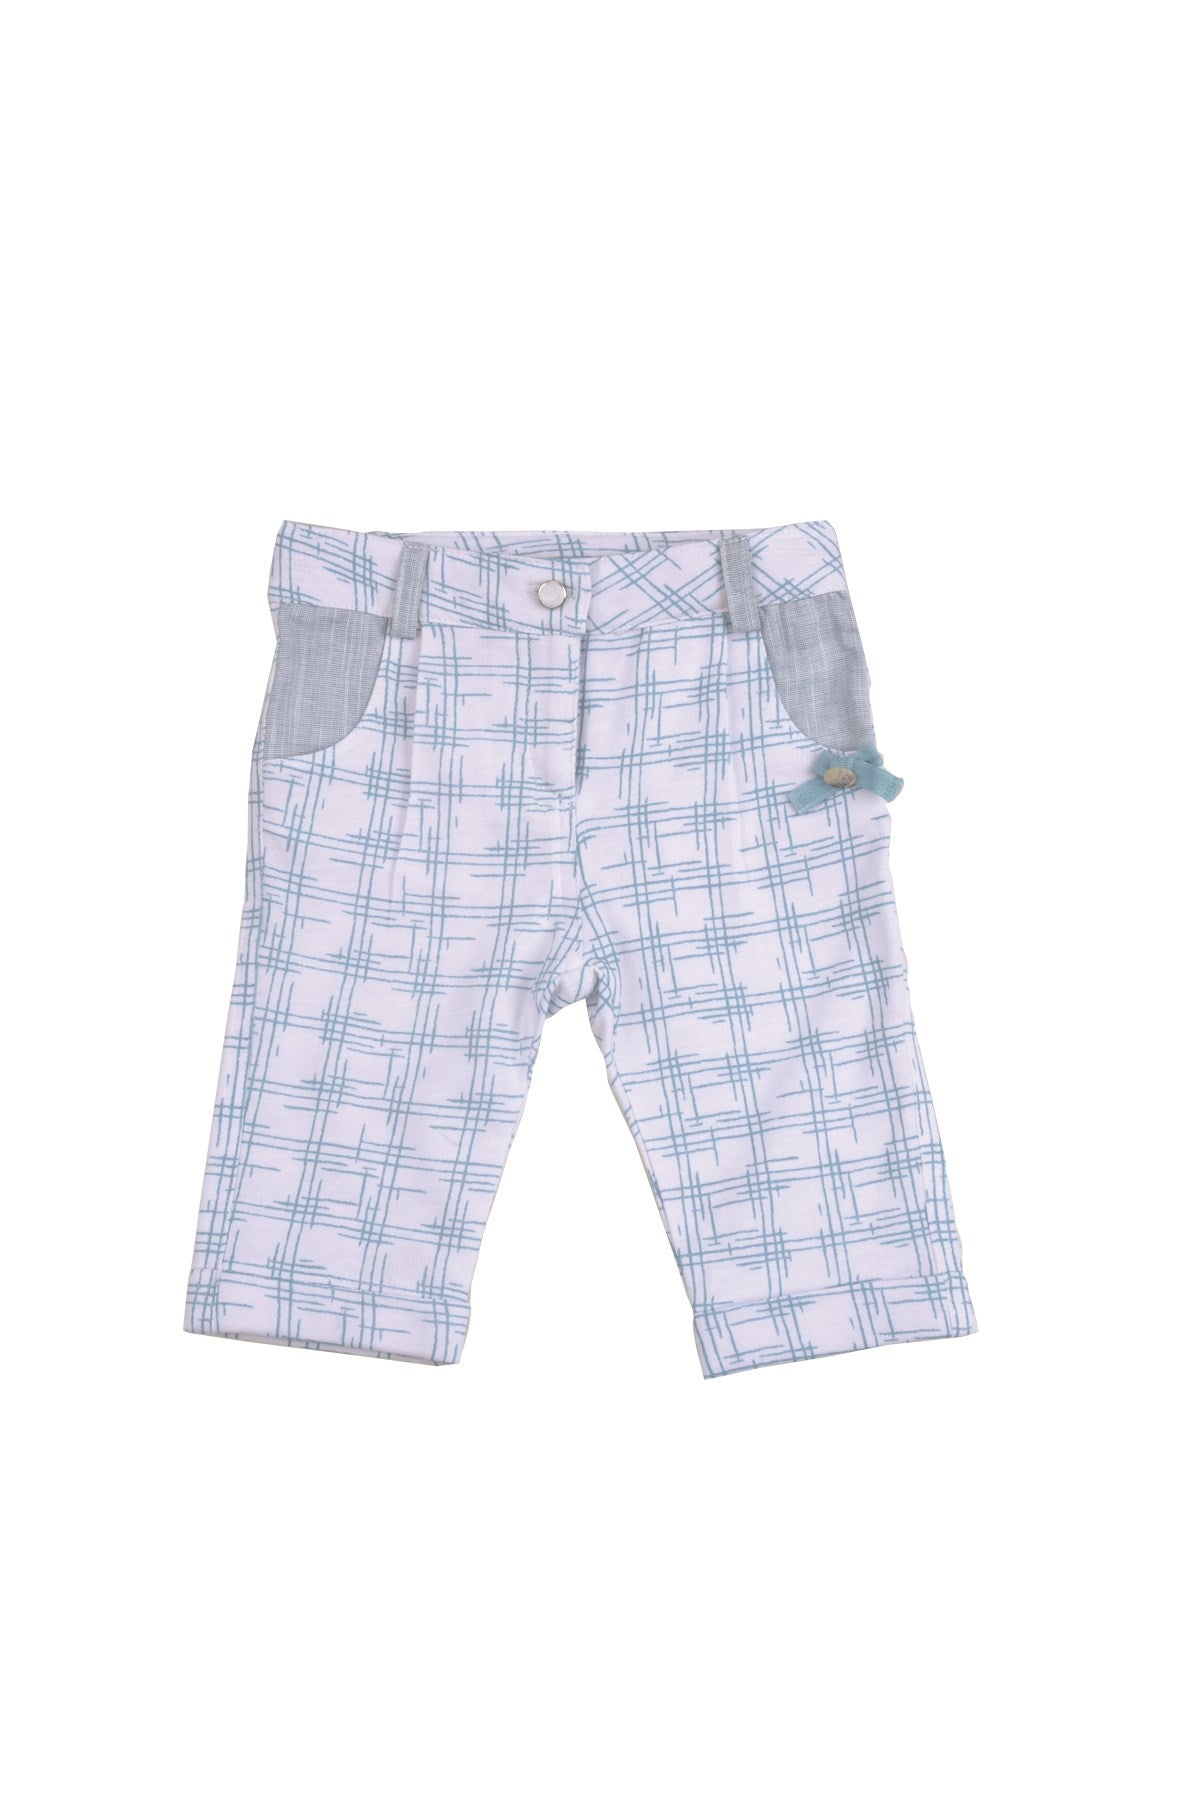 Kız Bebek Yeşil Çizgili Pantolon (6ay-4yaş)-0